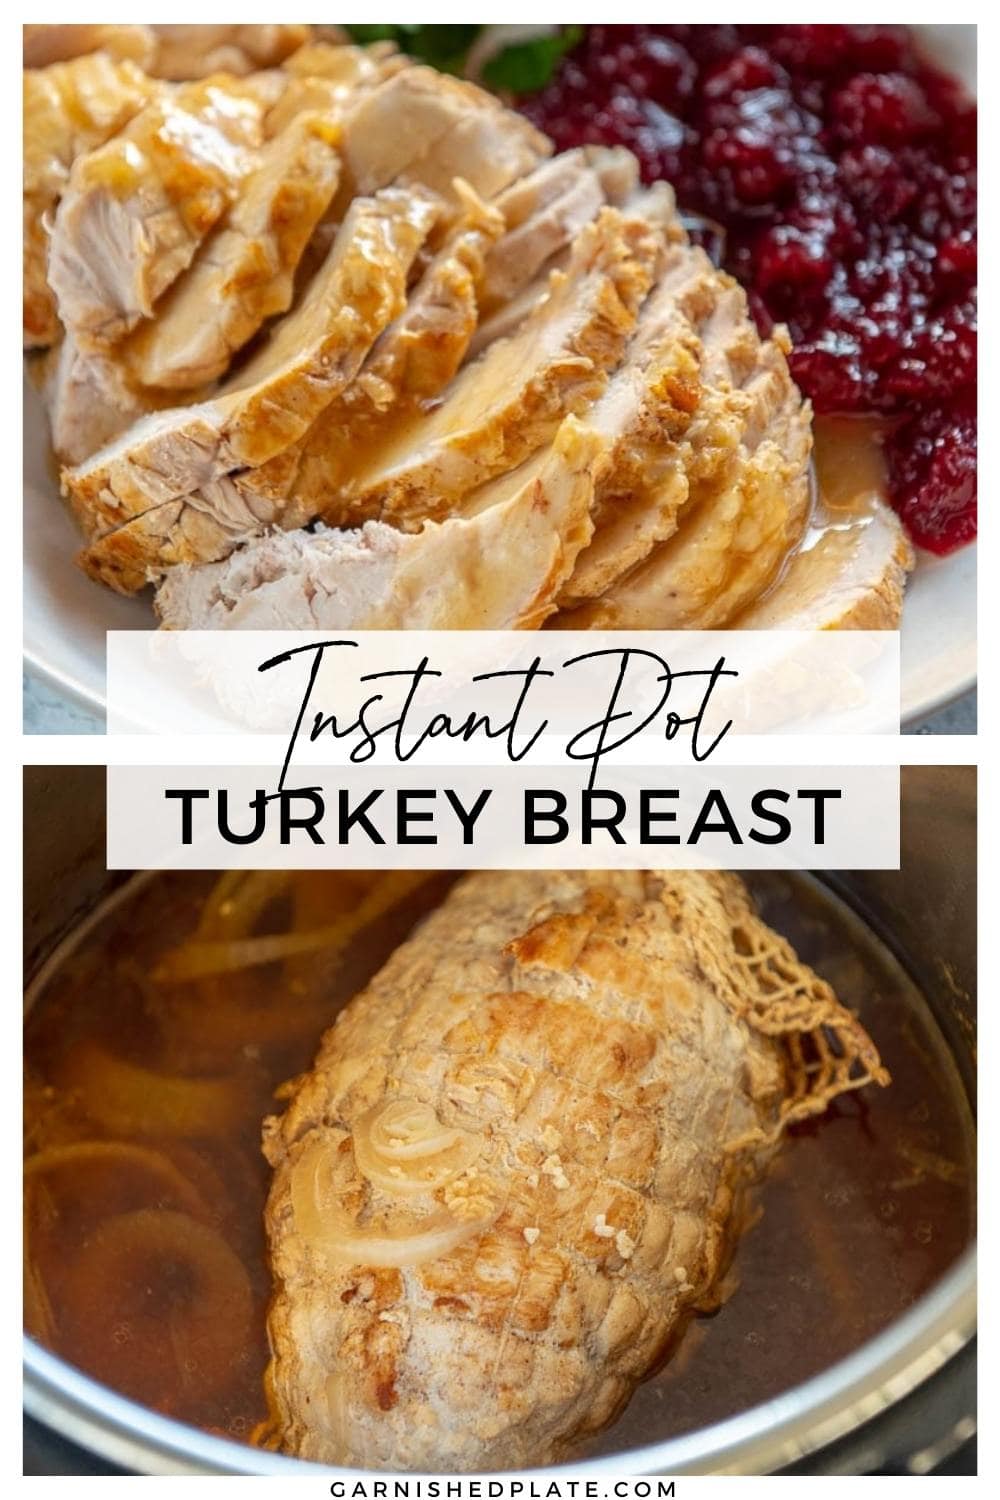 Instant Pot Turkey Breast - Garnished Plate